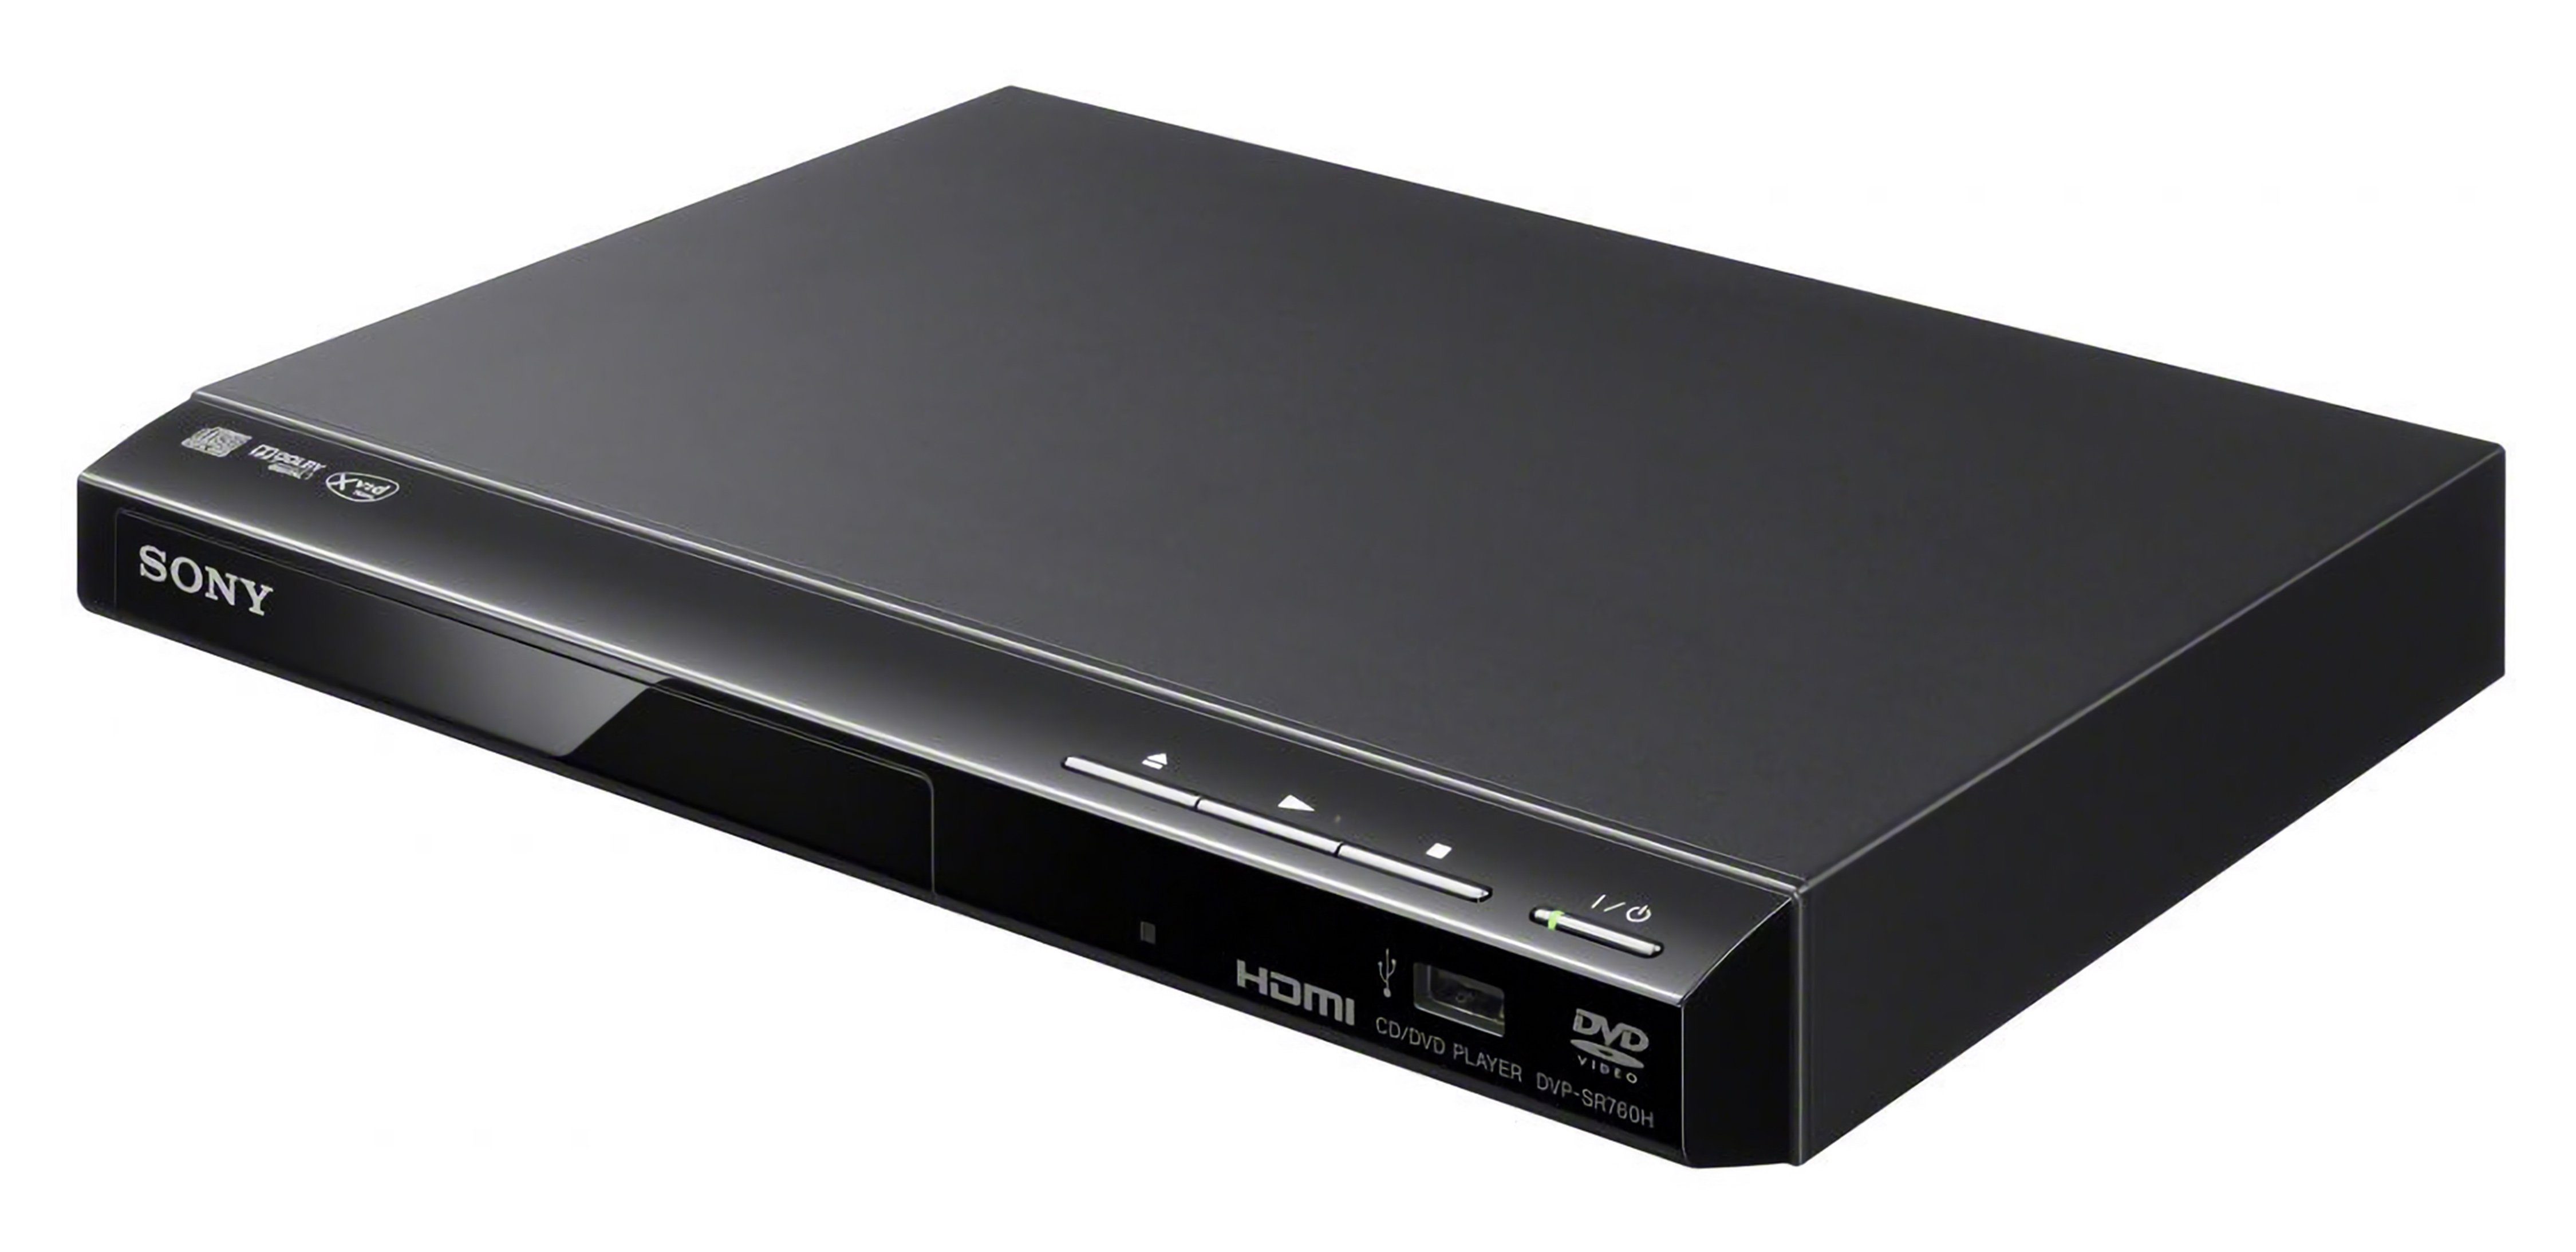 Sony »DVP-SR760H« DVD-Player (Full HD) online kaufen | OTTO